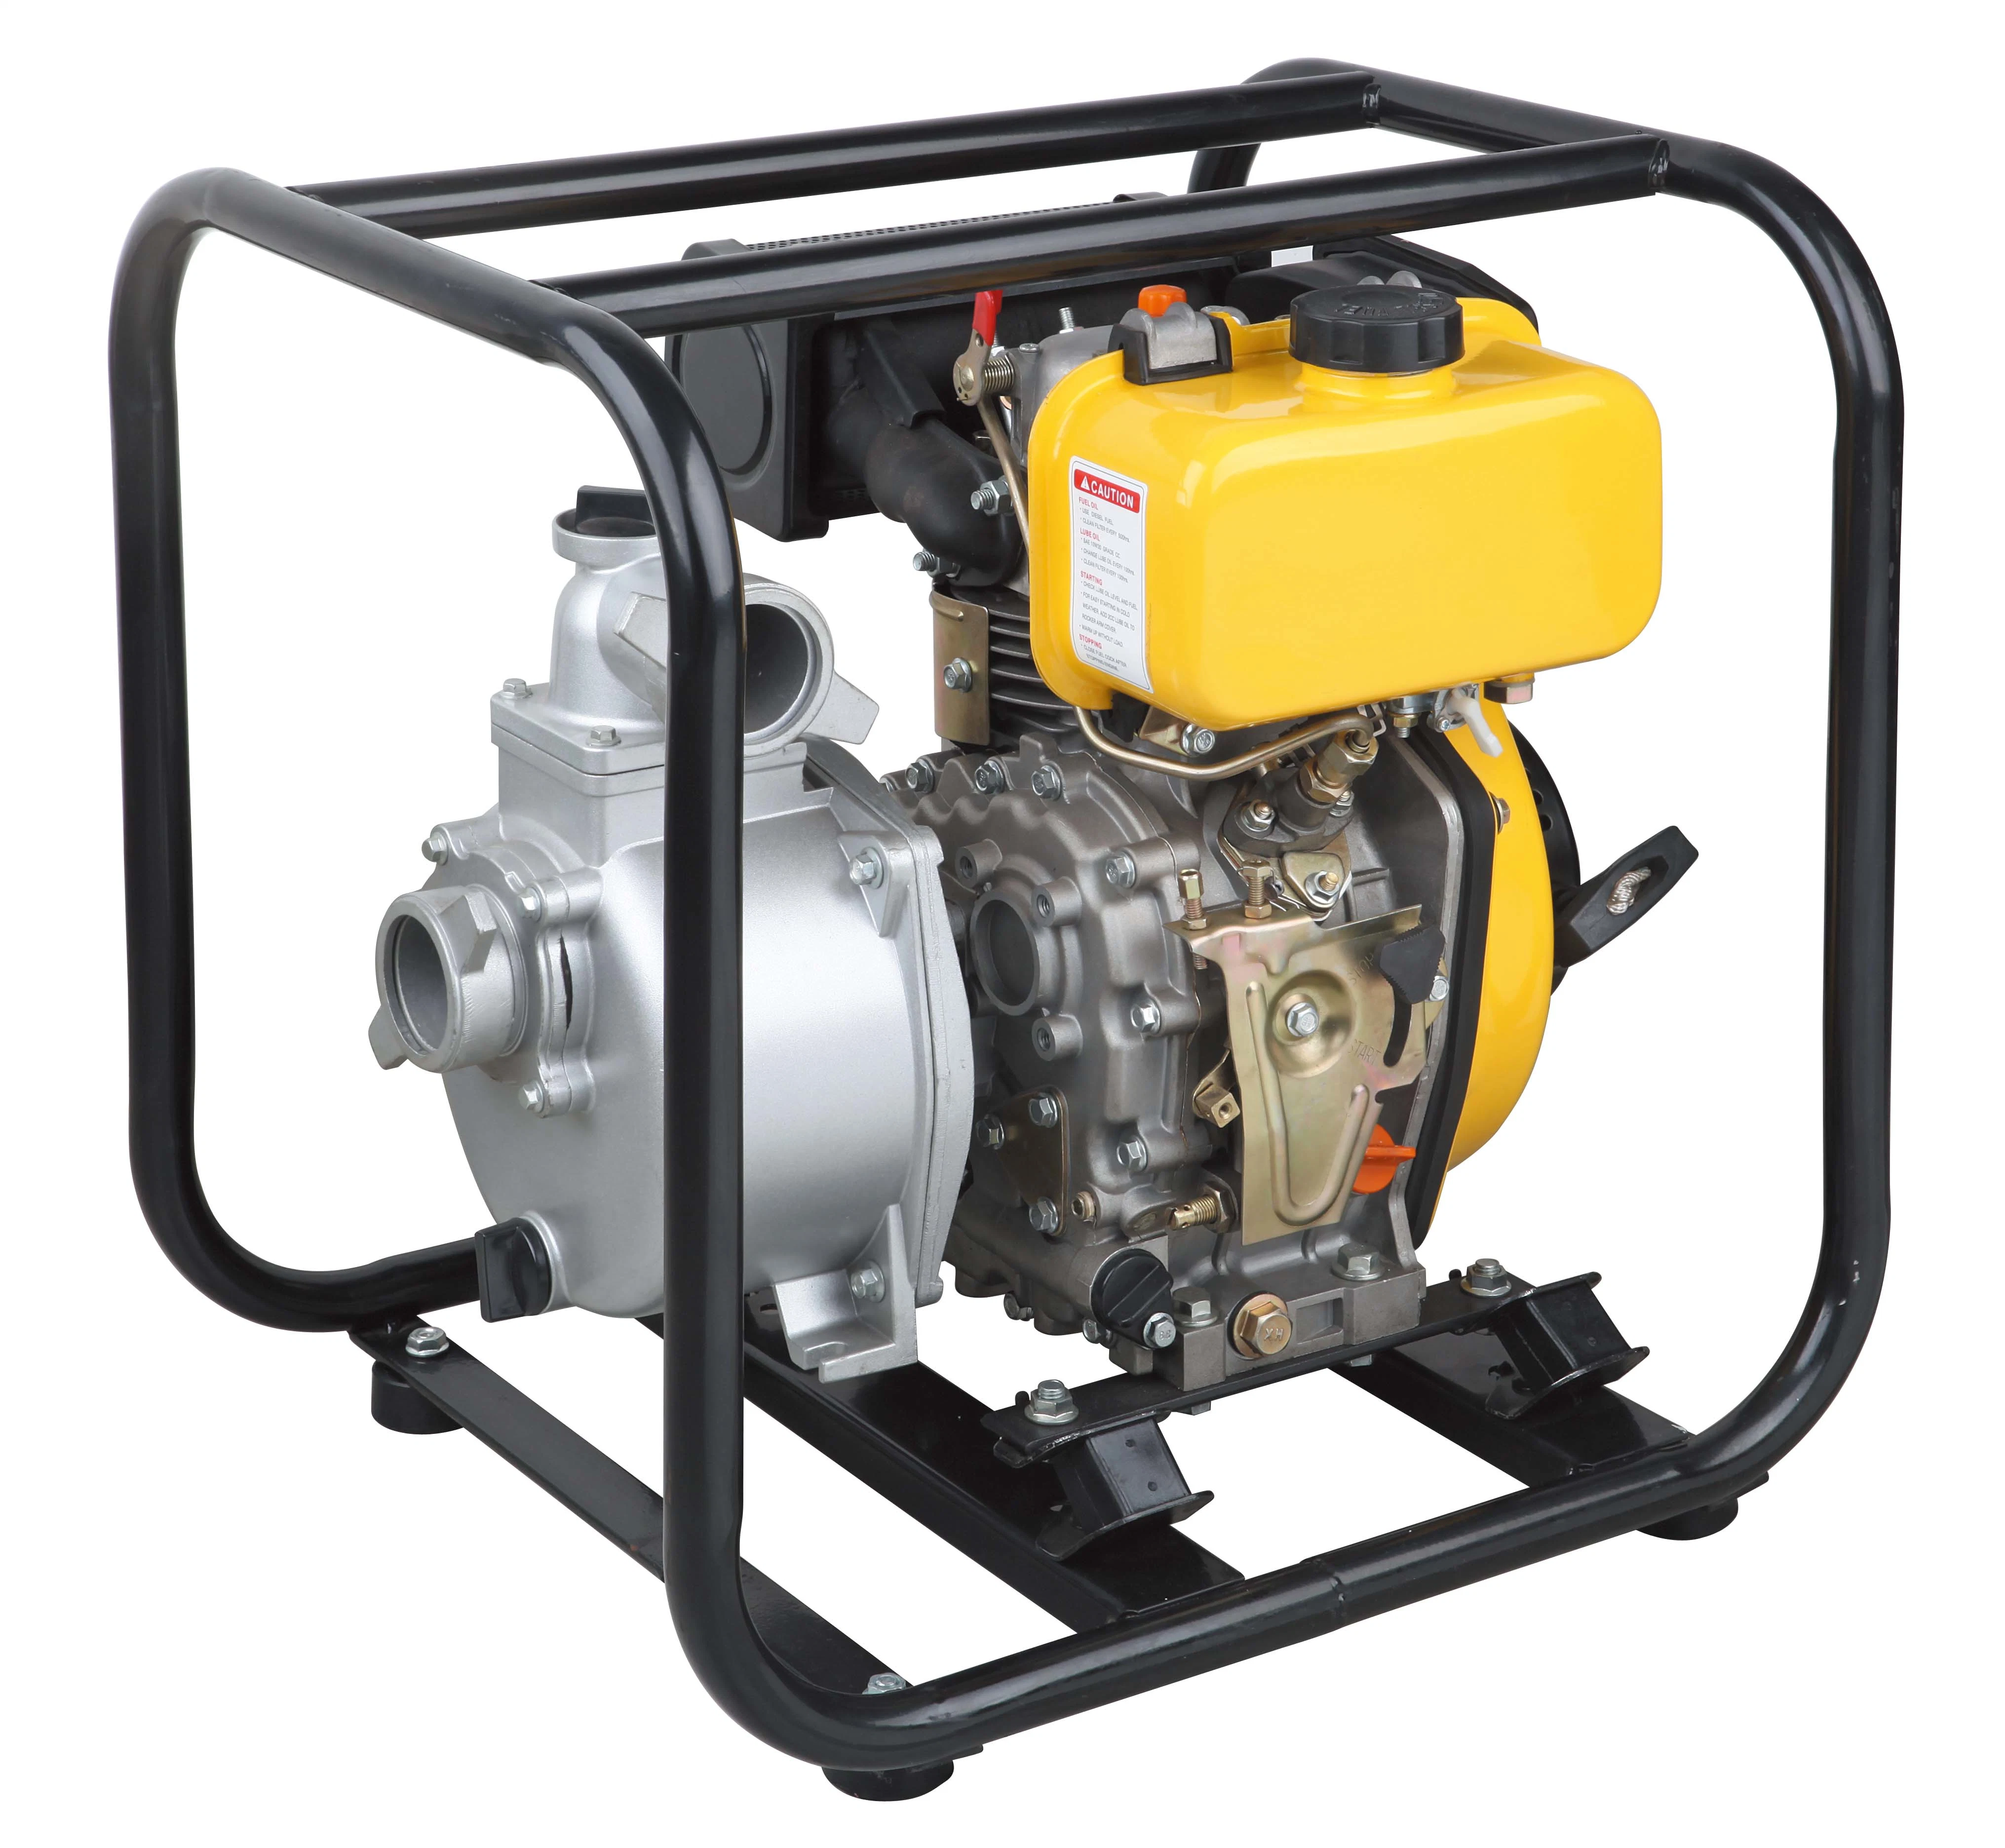 Extec Dwb50 211cc Self-Prinmig Jet Gear Small Recoil Washing Diesel Engine Water Pump